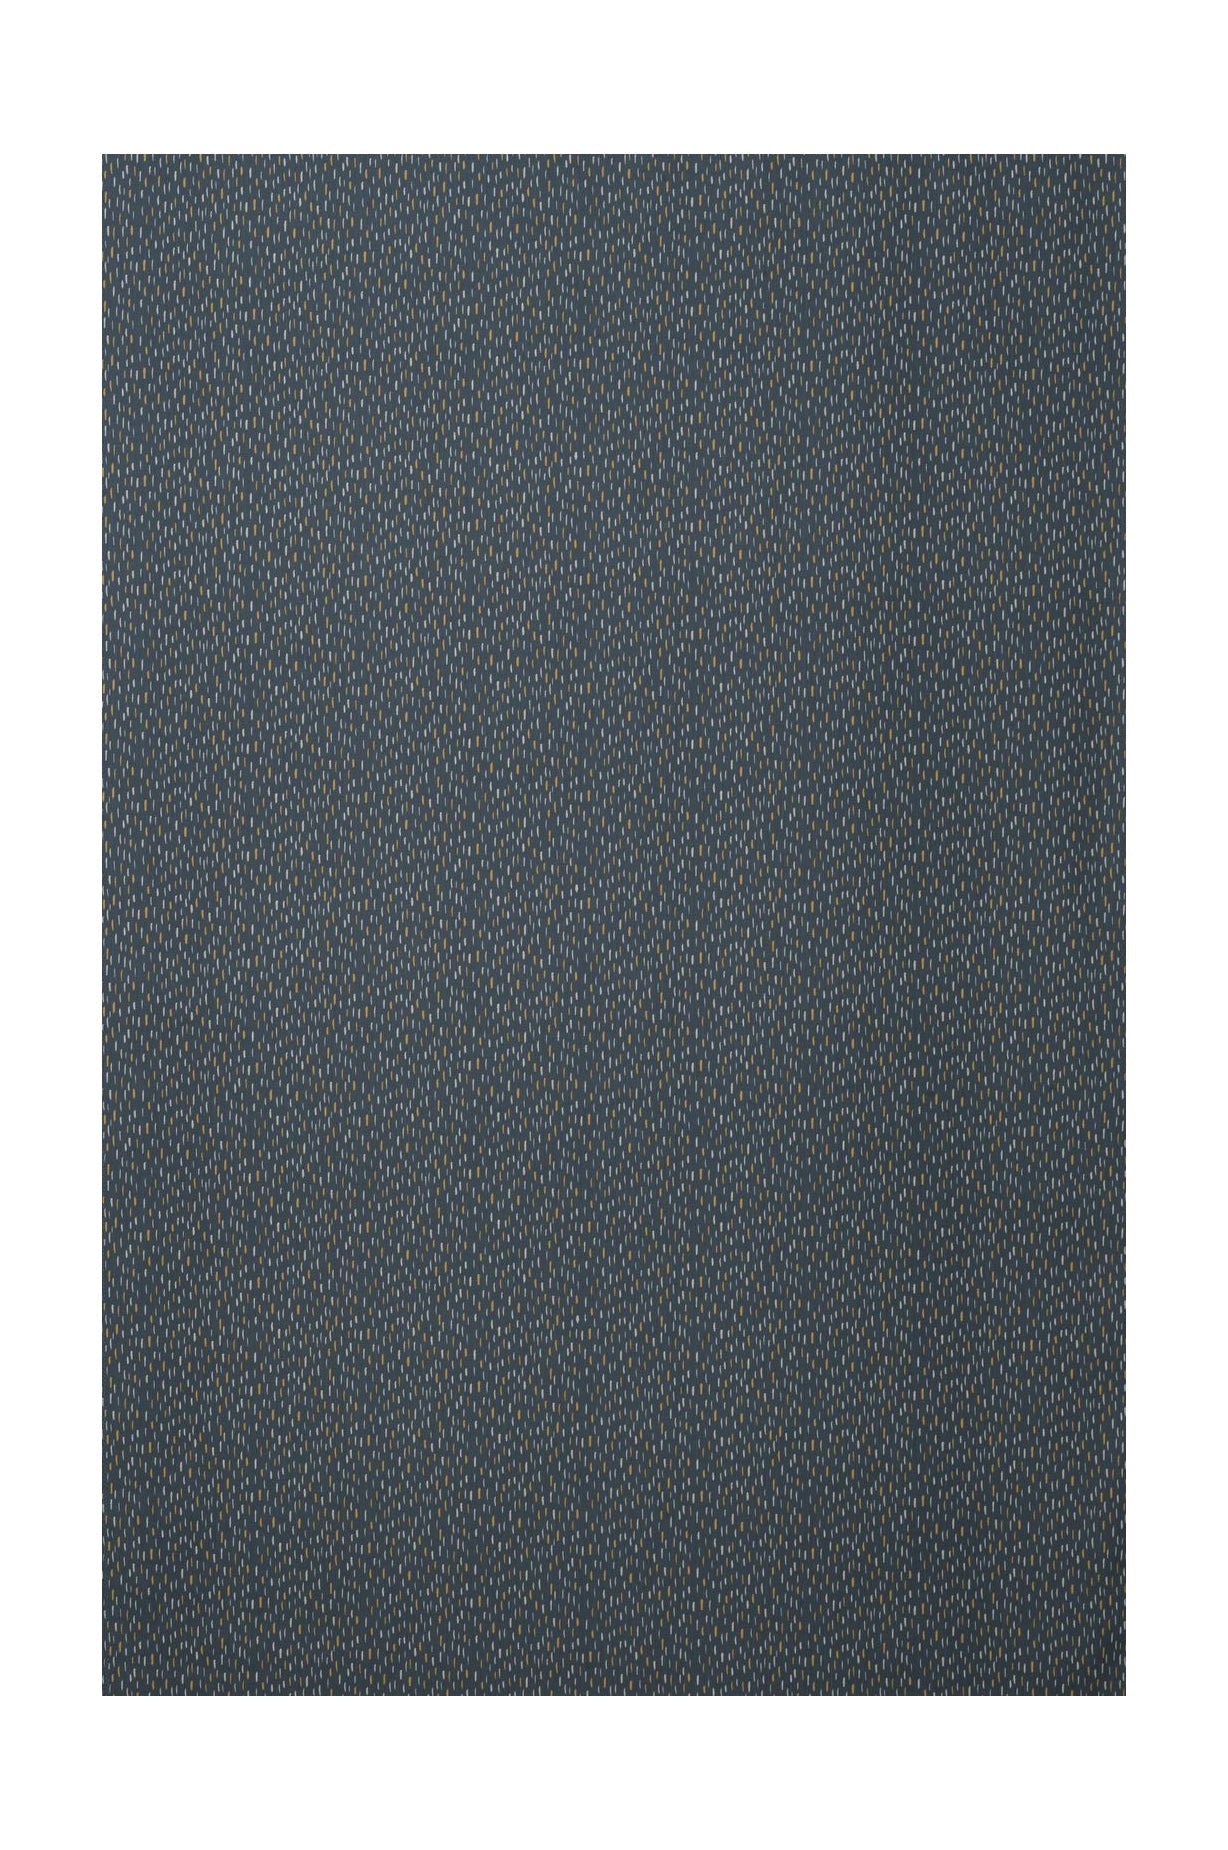 Šířka tkaniny Spira Art 30 cm (cena za metr), modrá